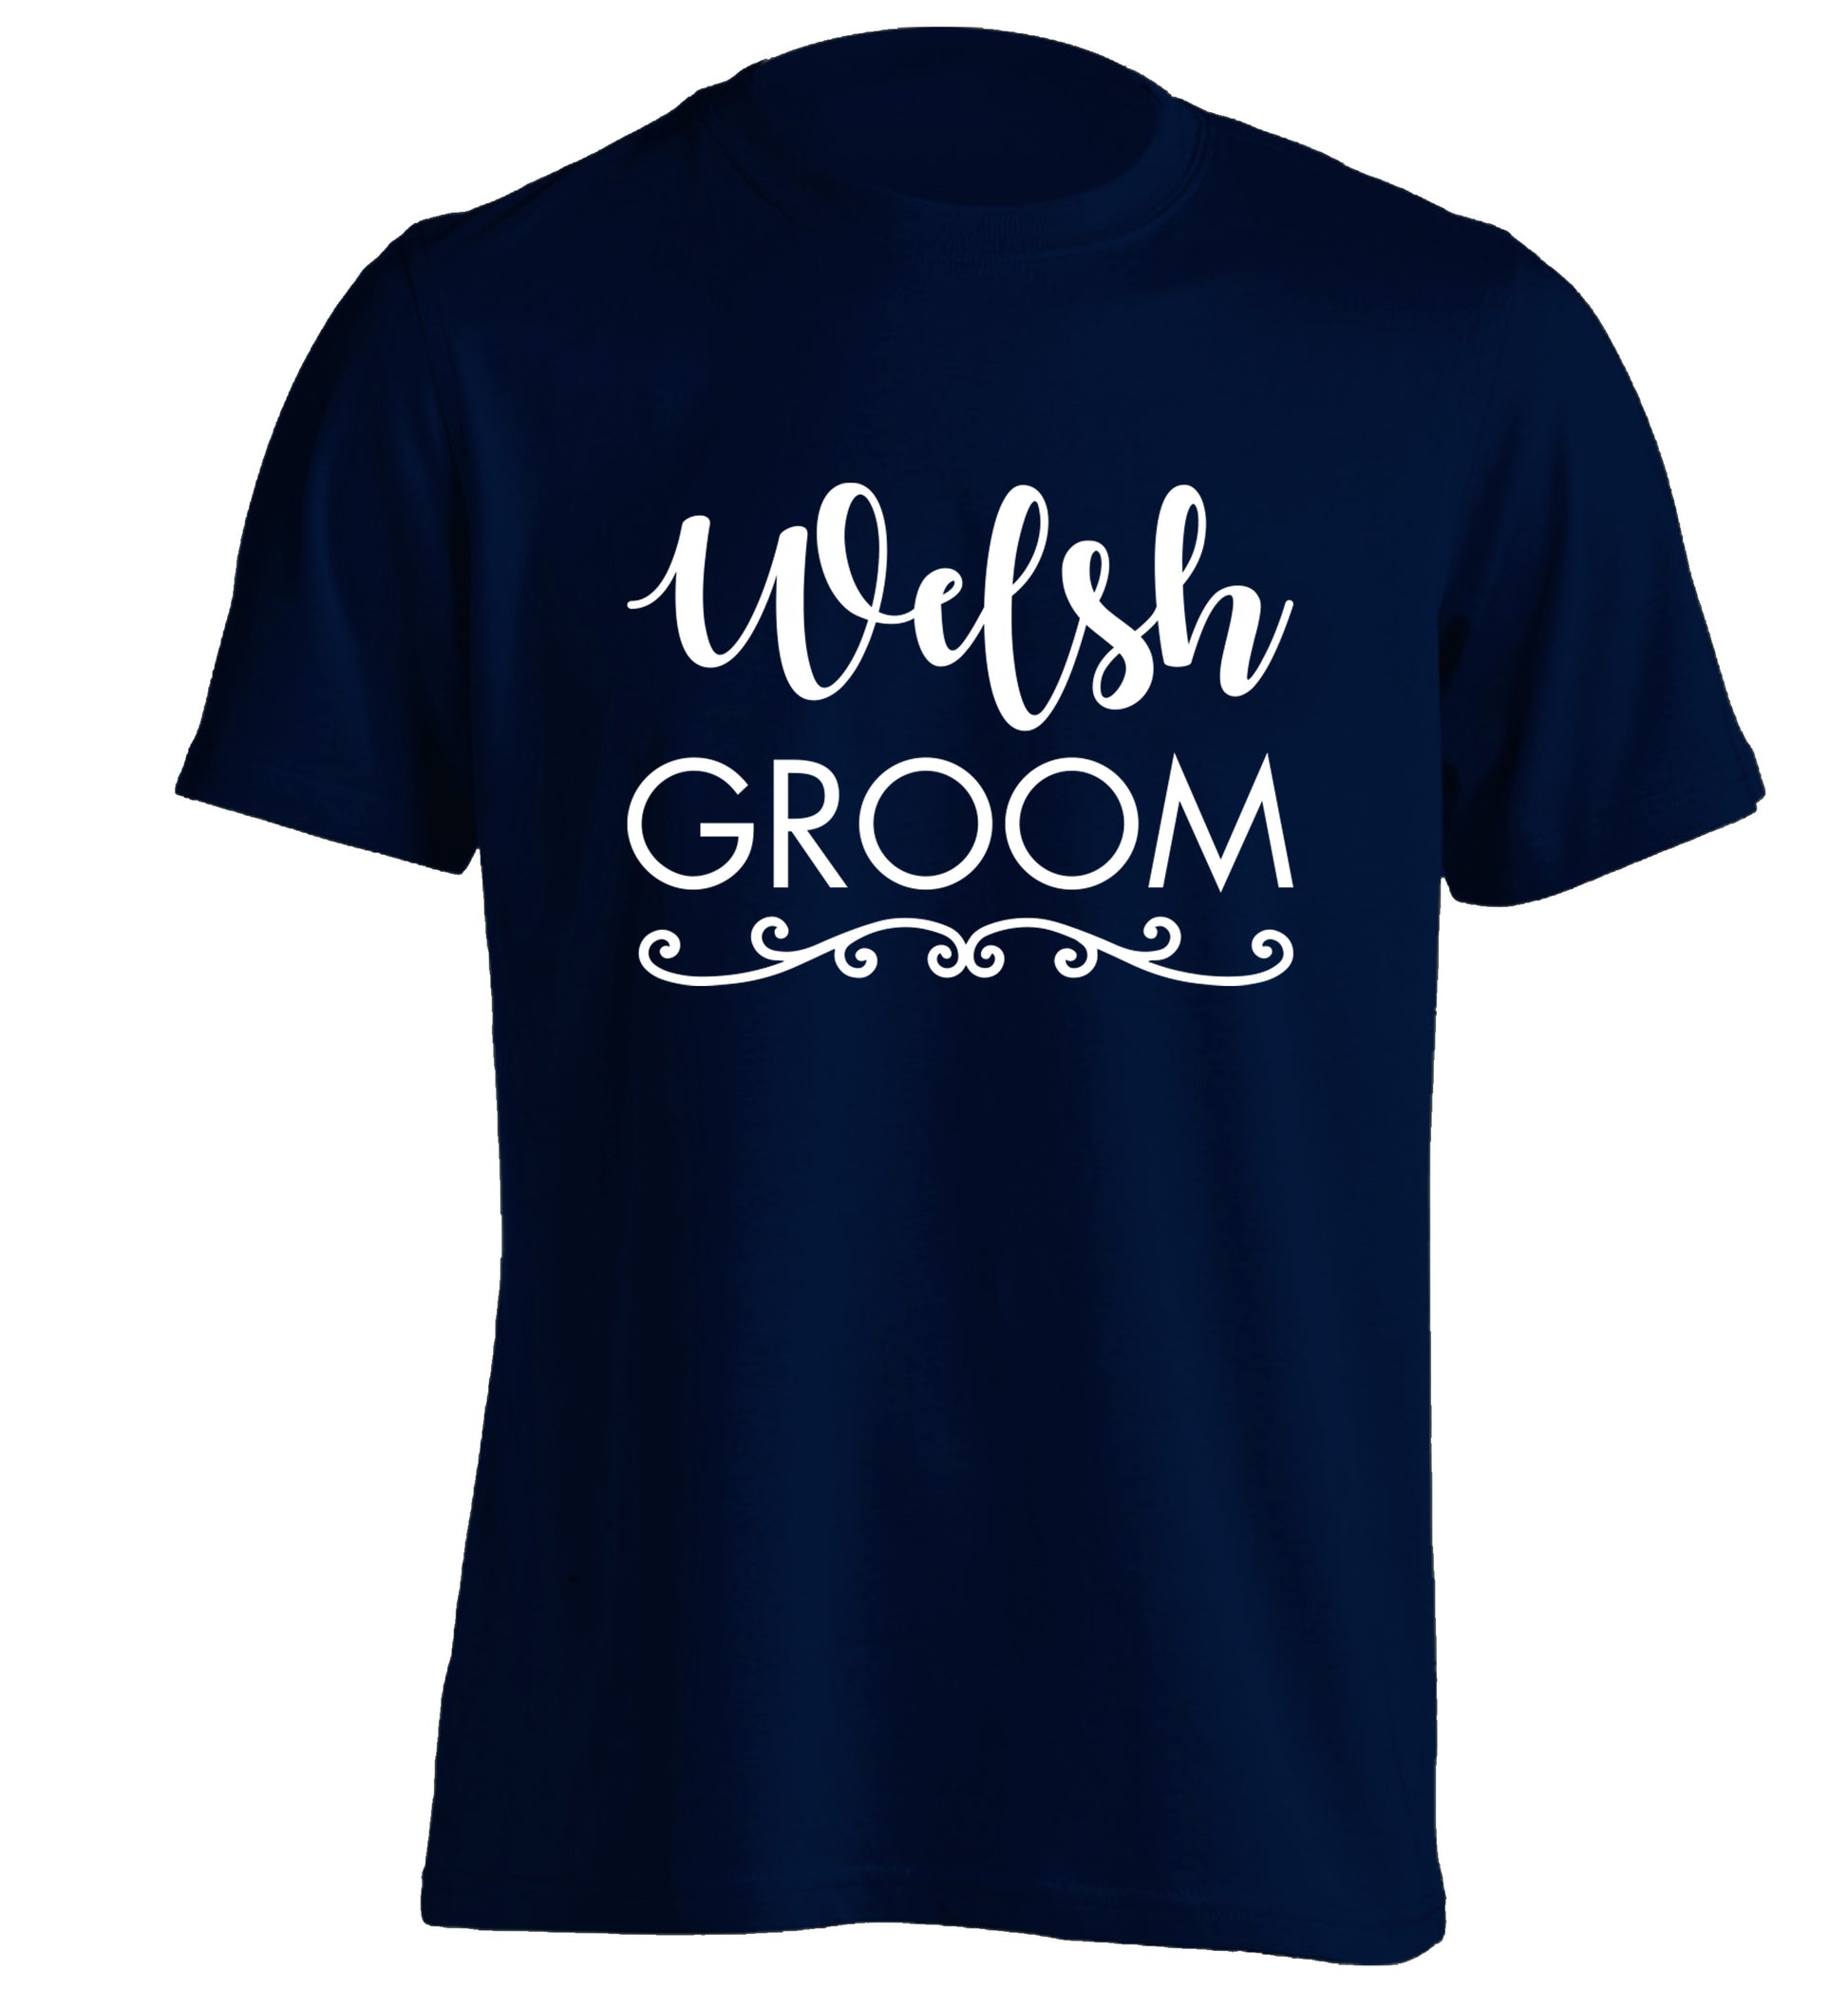 Welsh groom adults unisex navy Tshirt 2XL